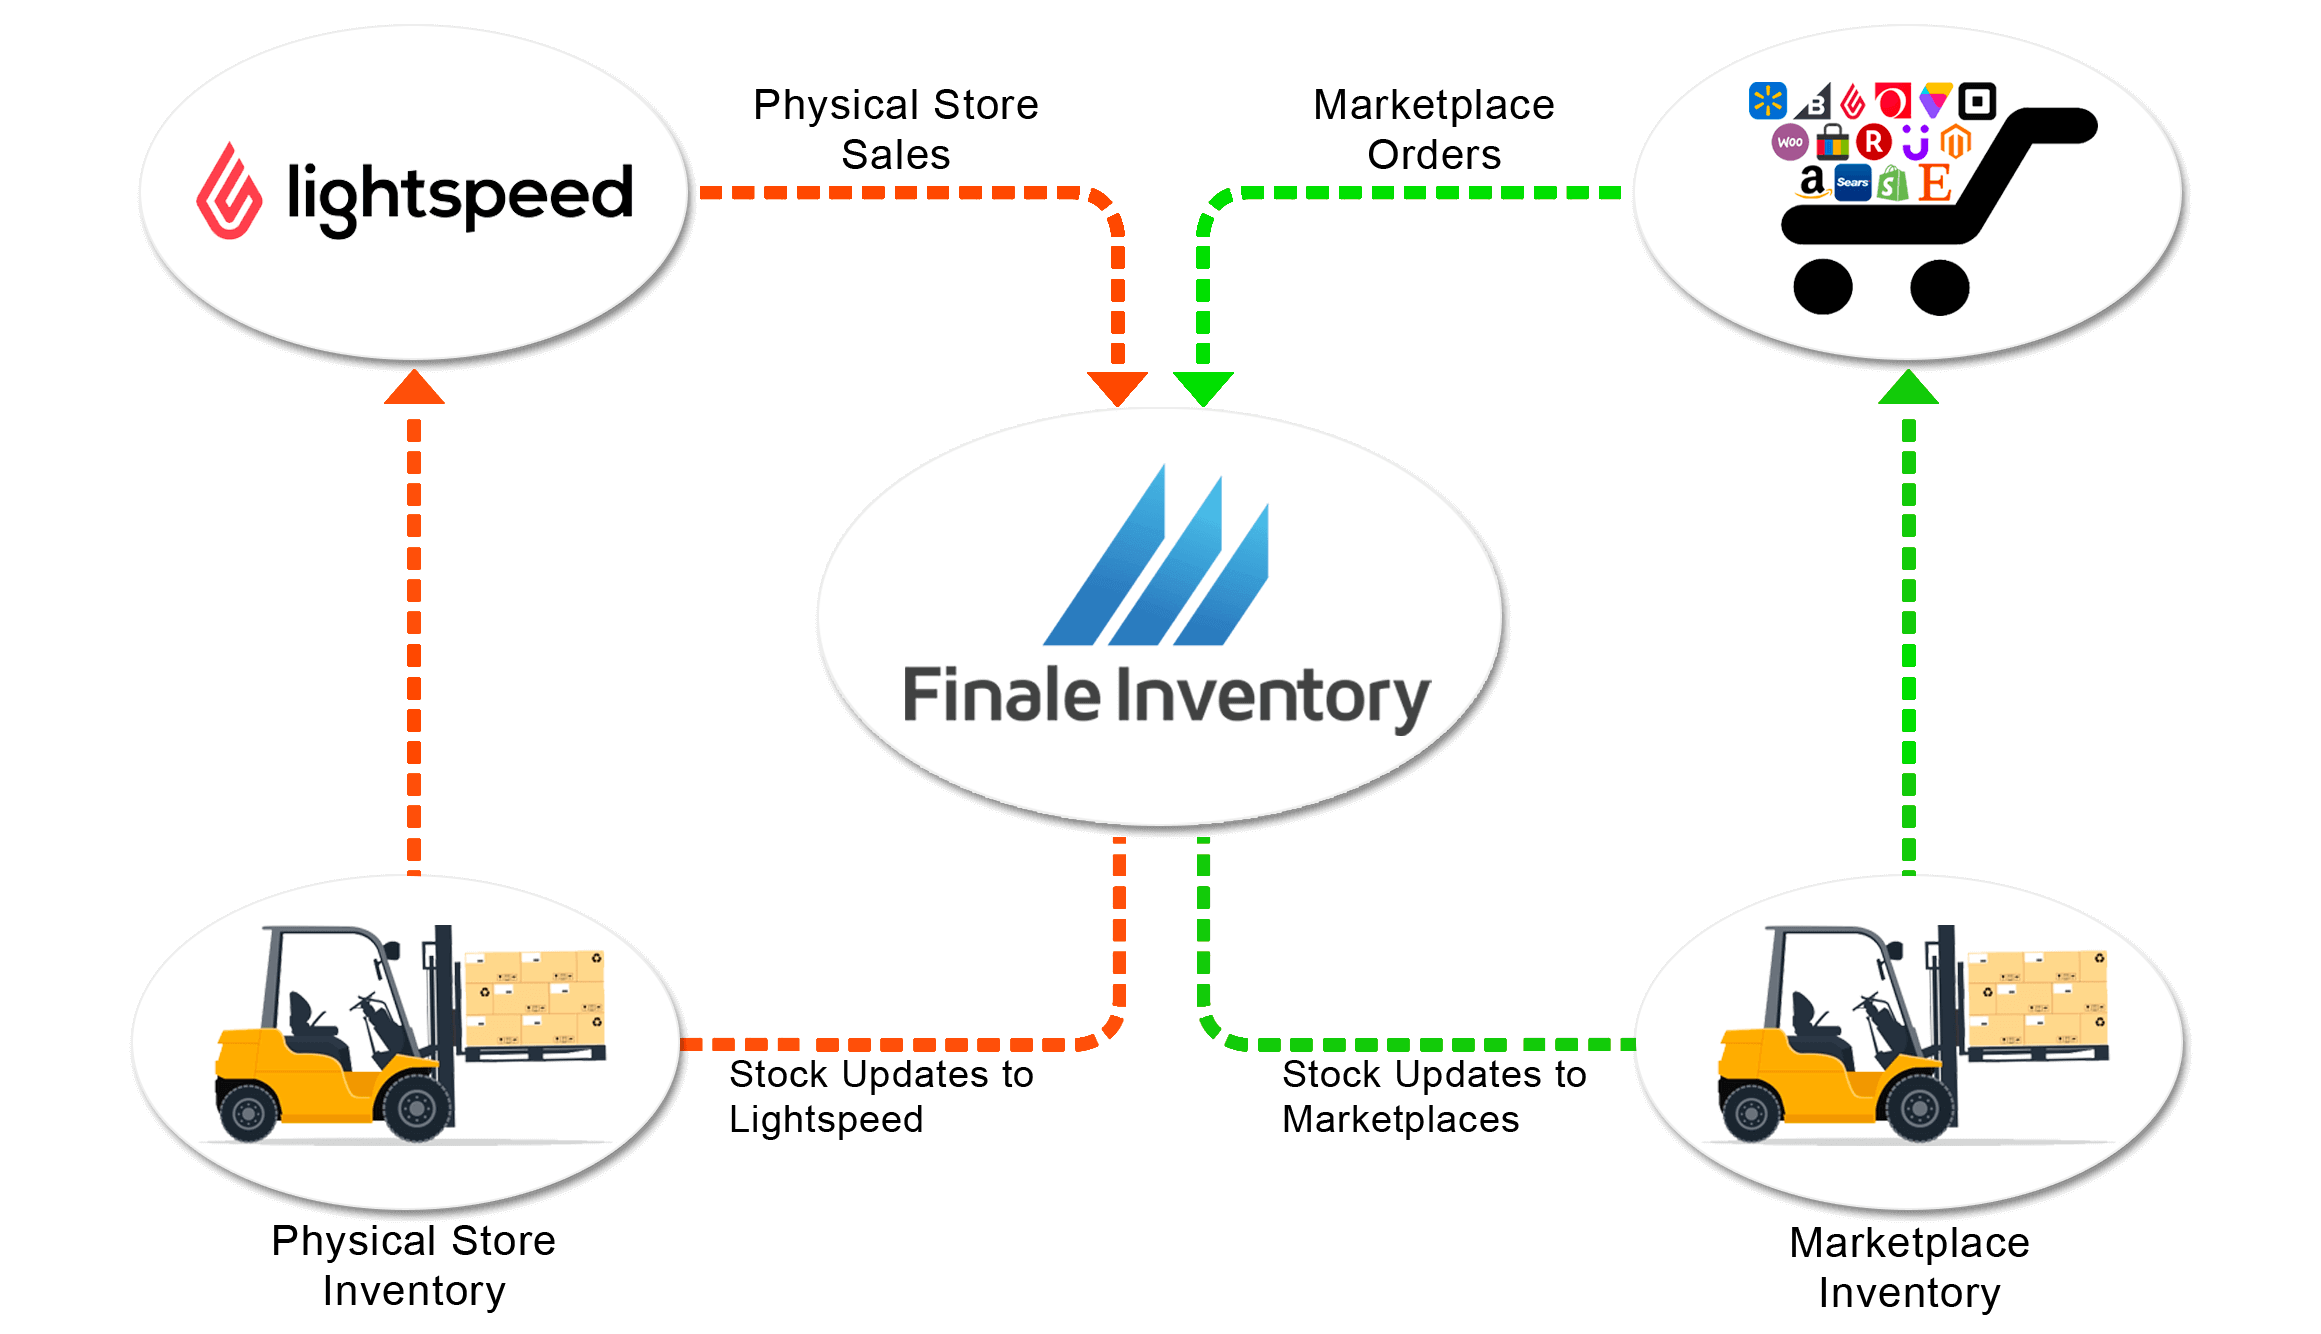 Lightspeed-Separate-Inventory-Flow-Chart